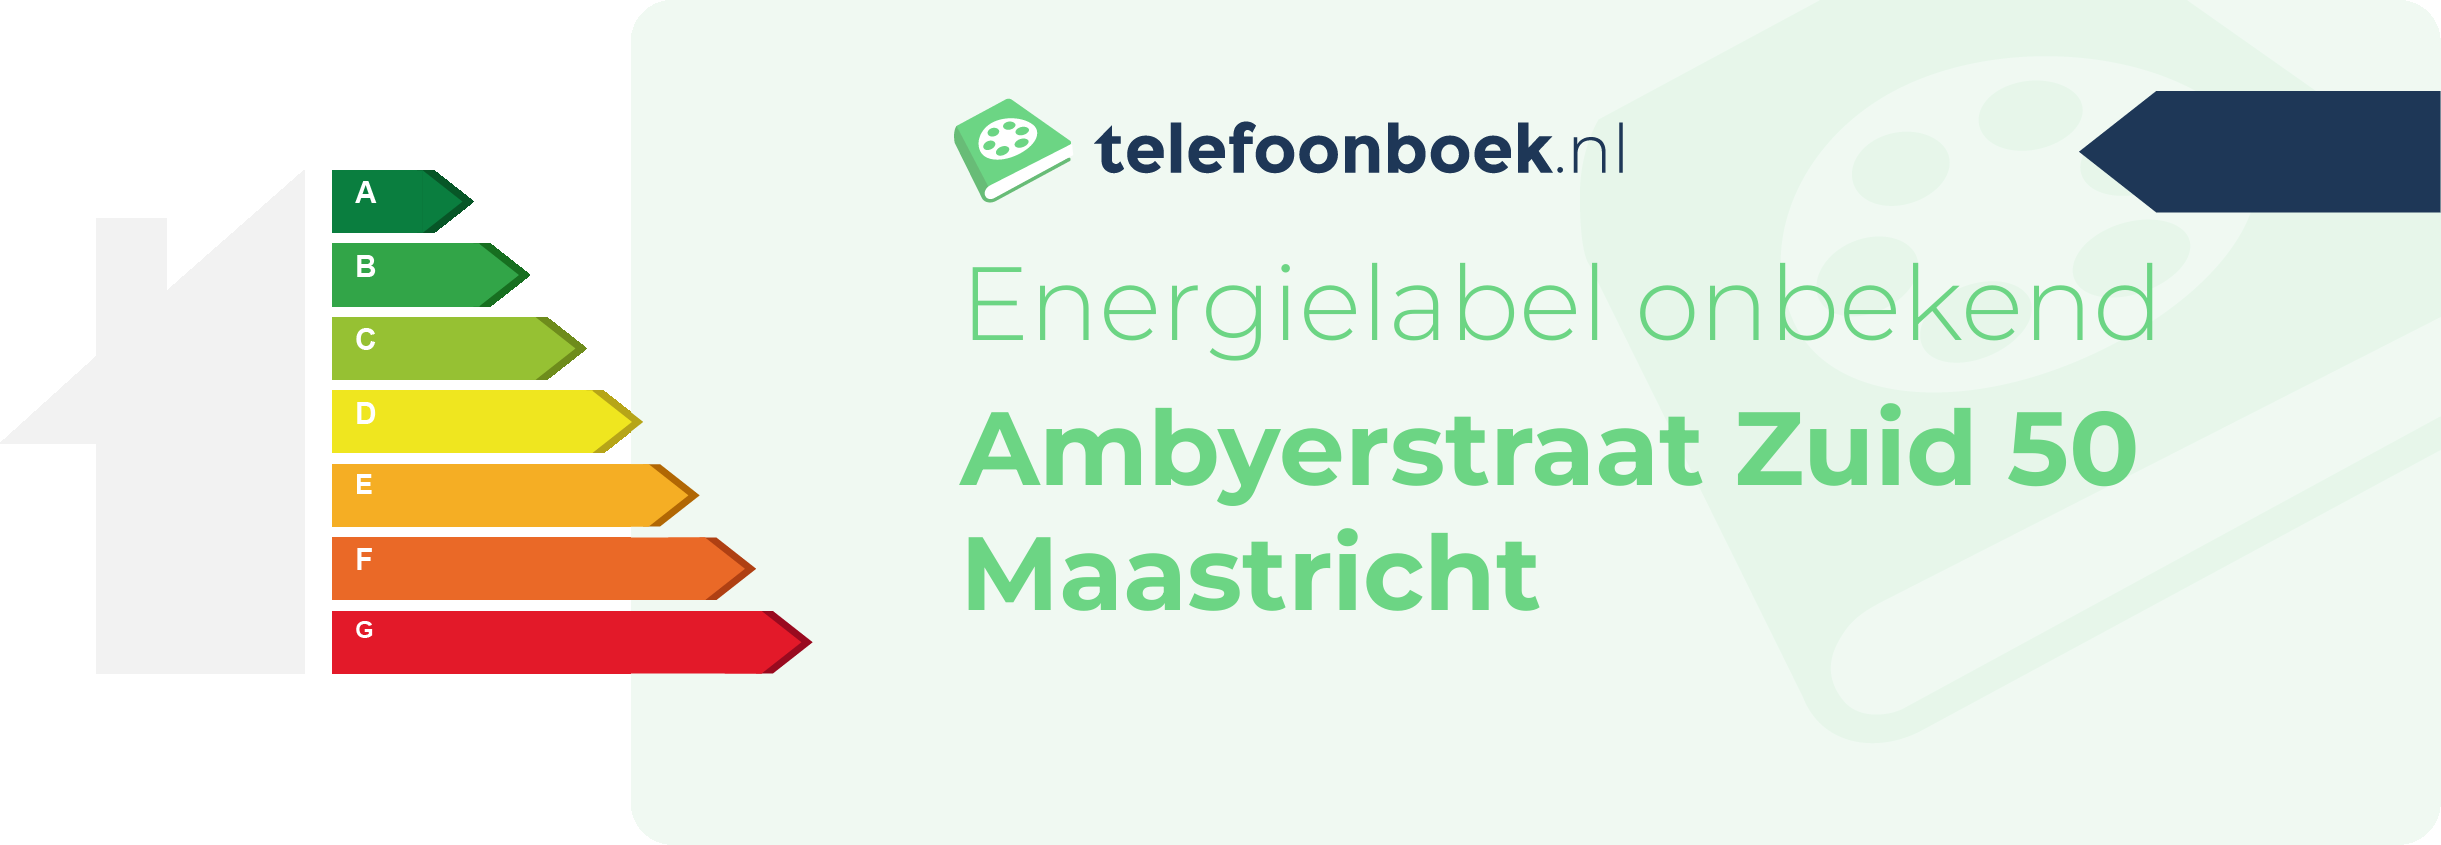 Energielabel Ambyerstraat Zuid 50 Maastricht